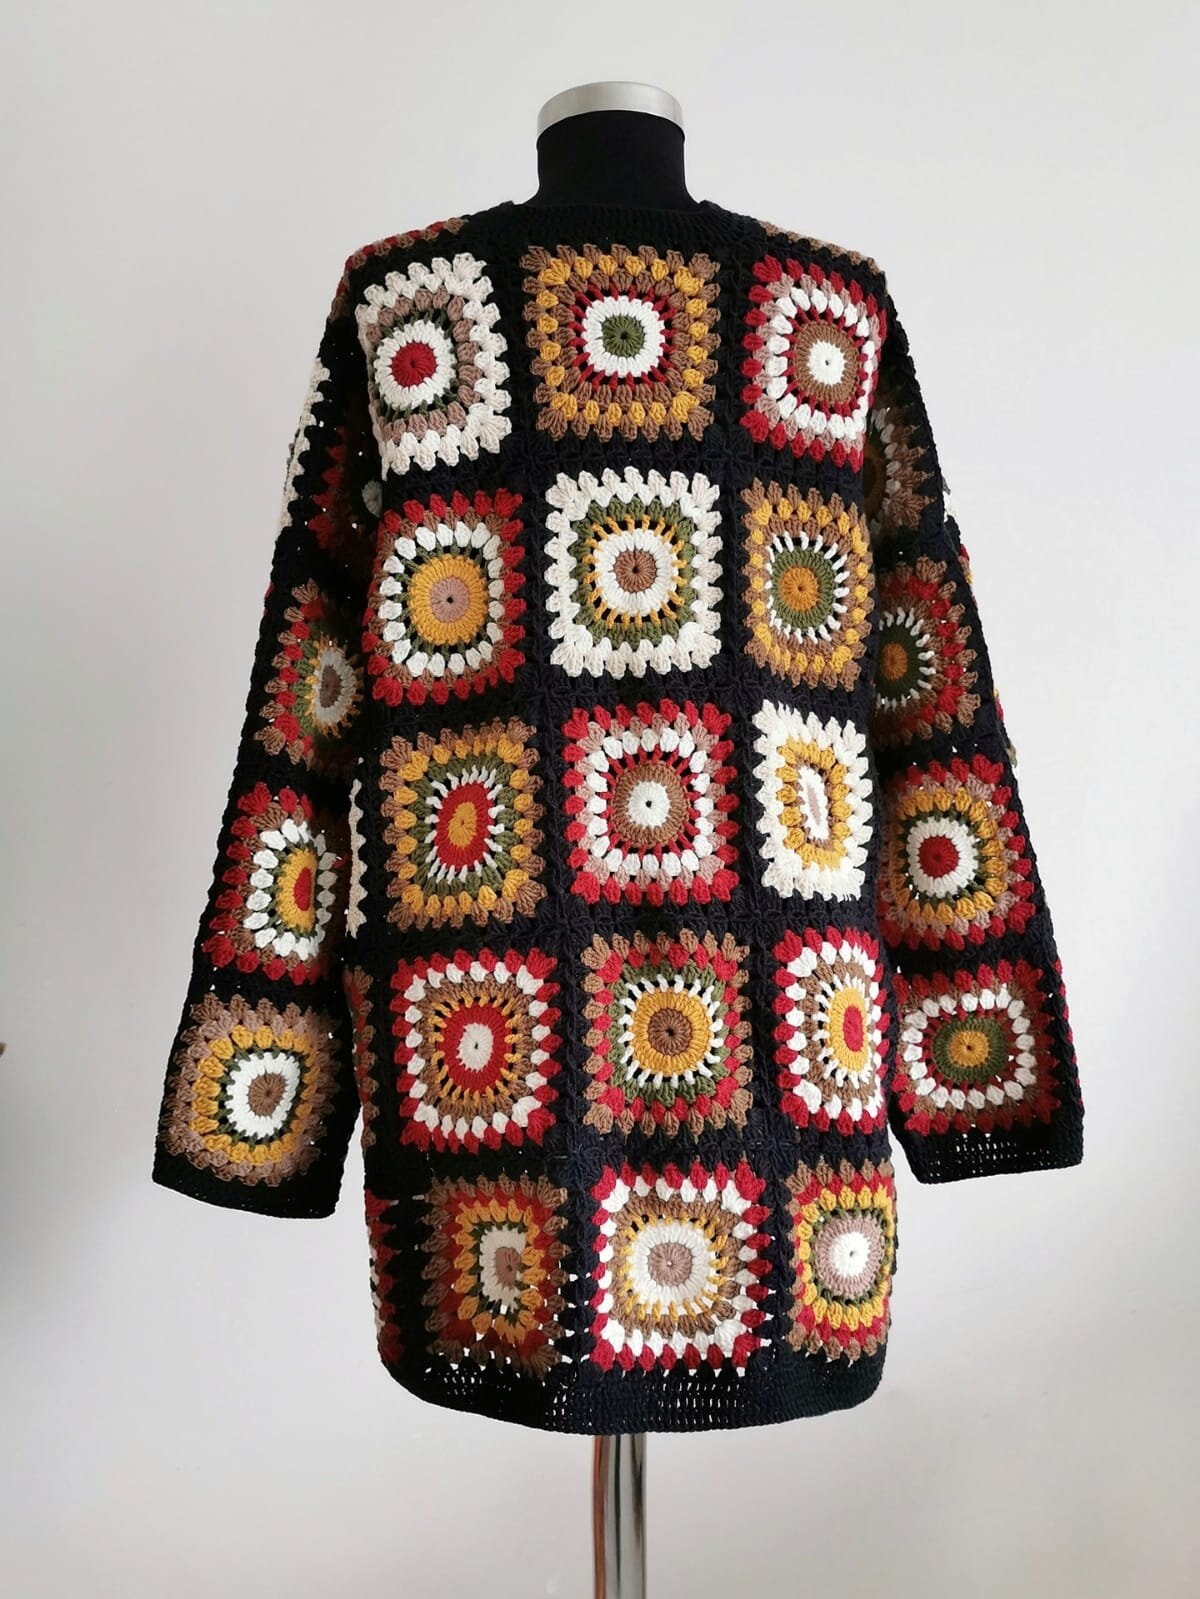 Granny Square Crochet Cotton Yarn Cardiganhandmade Crochet - Etsy